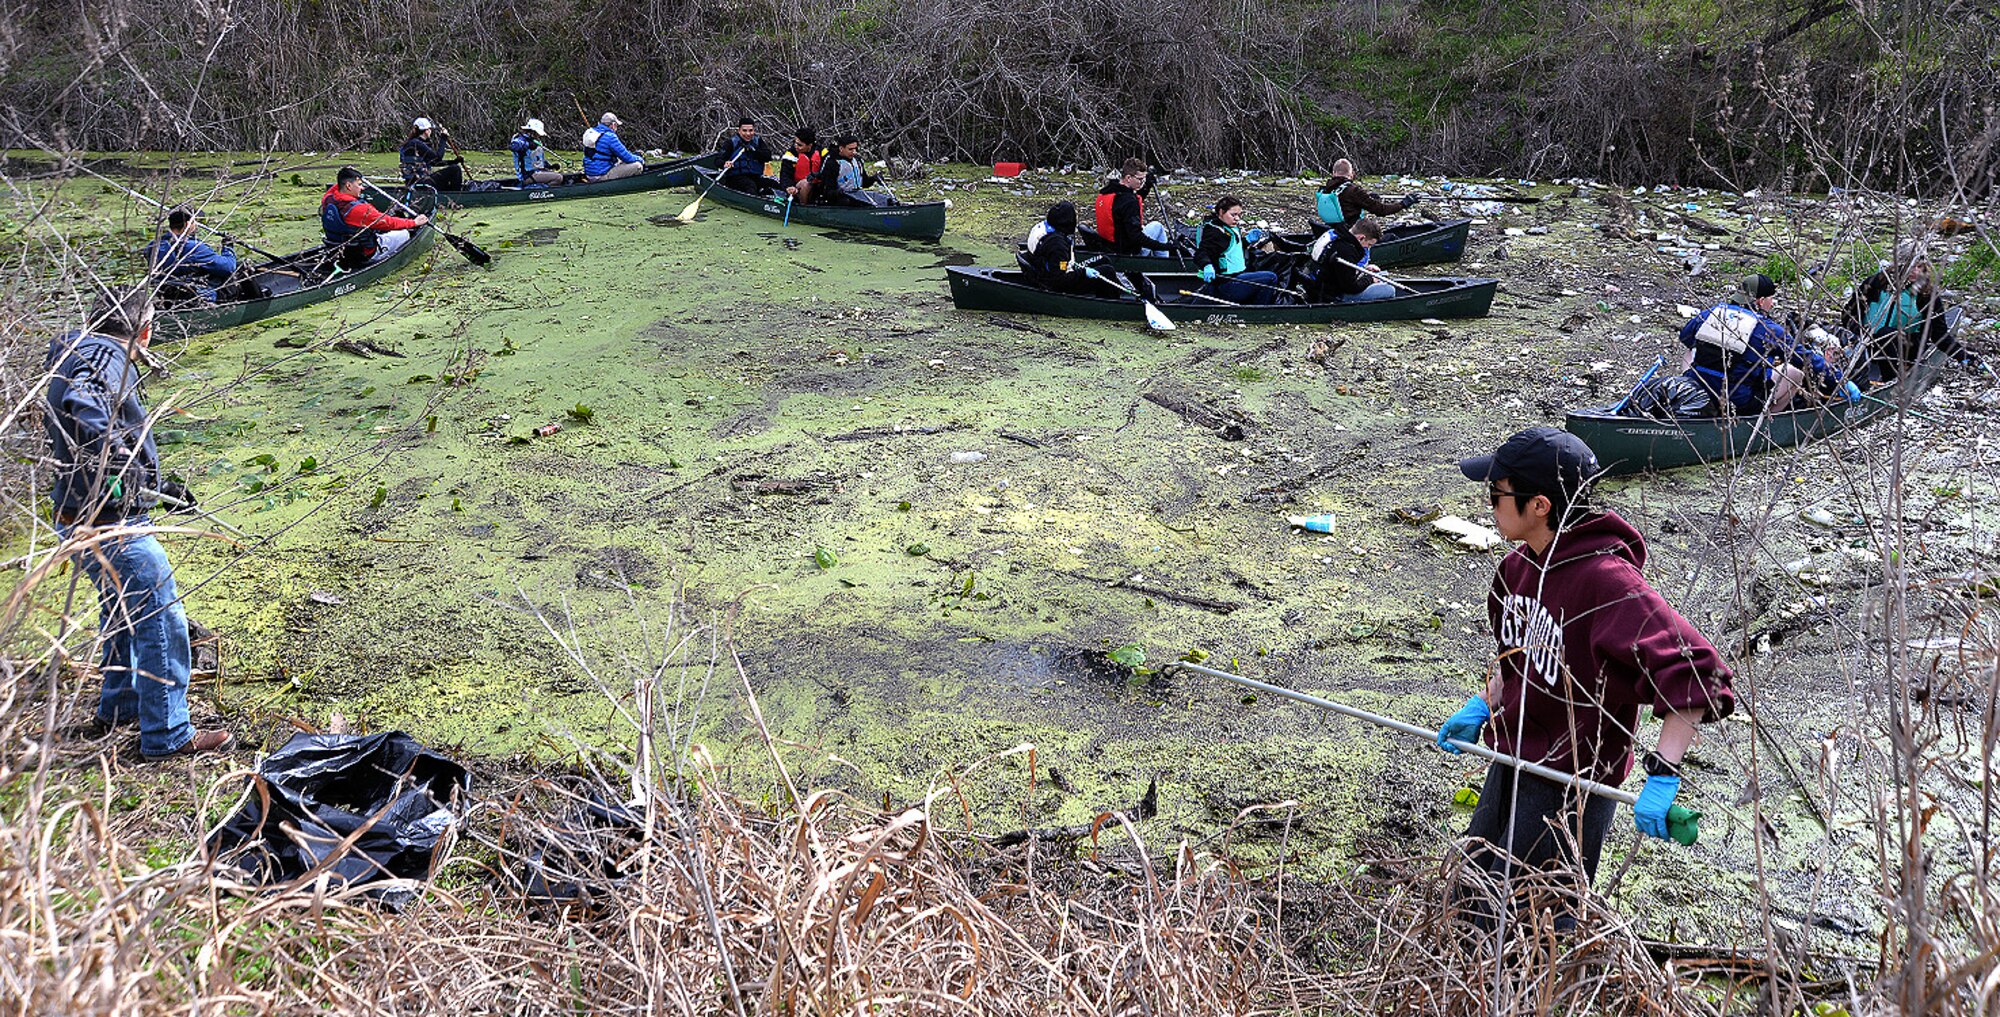 Basura Bash brings out volunteers to clean Salado Creek